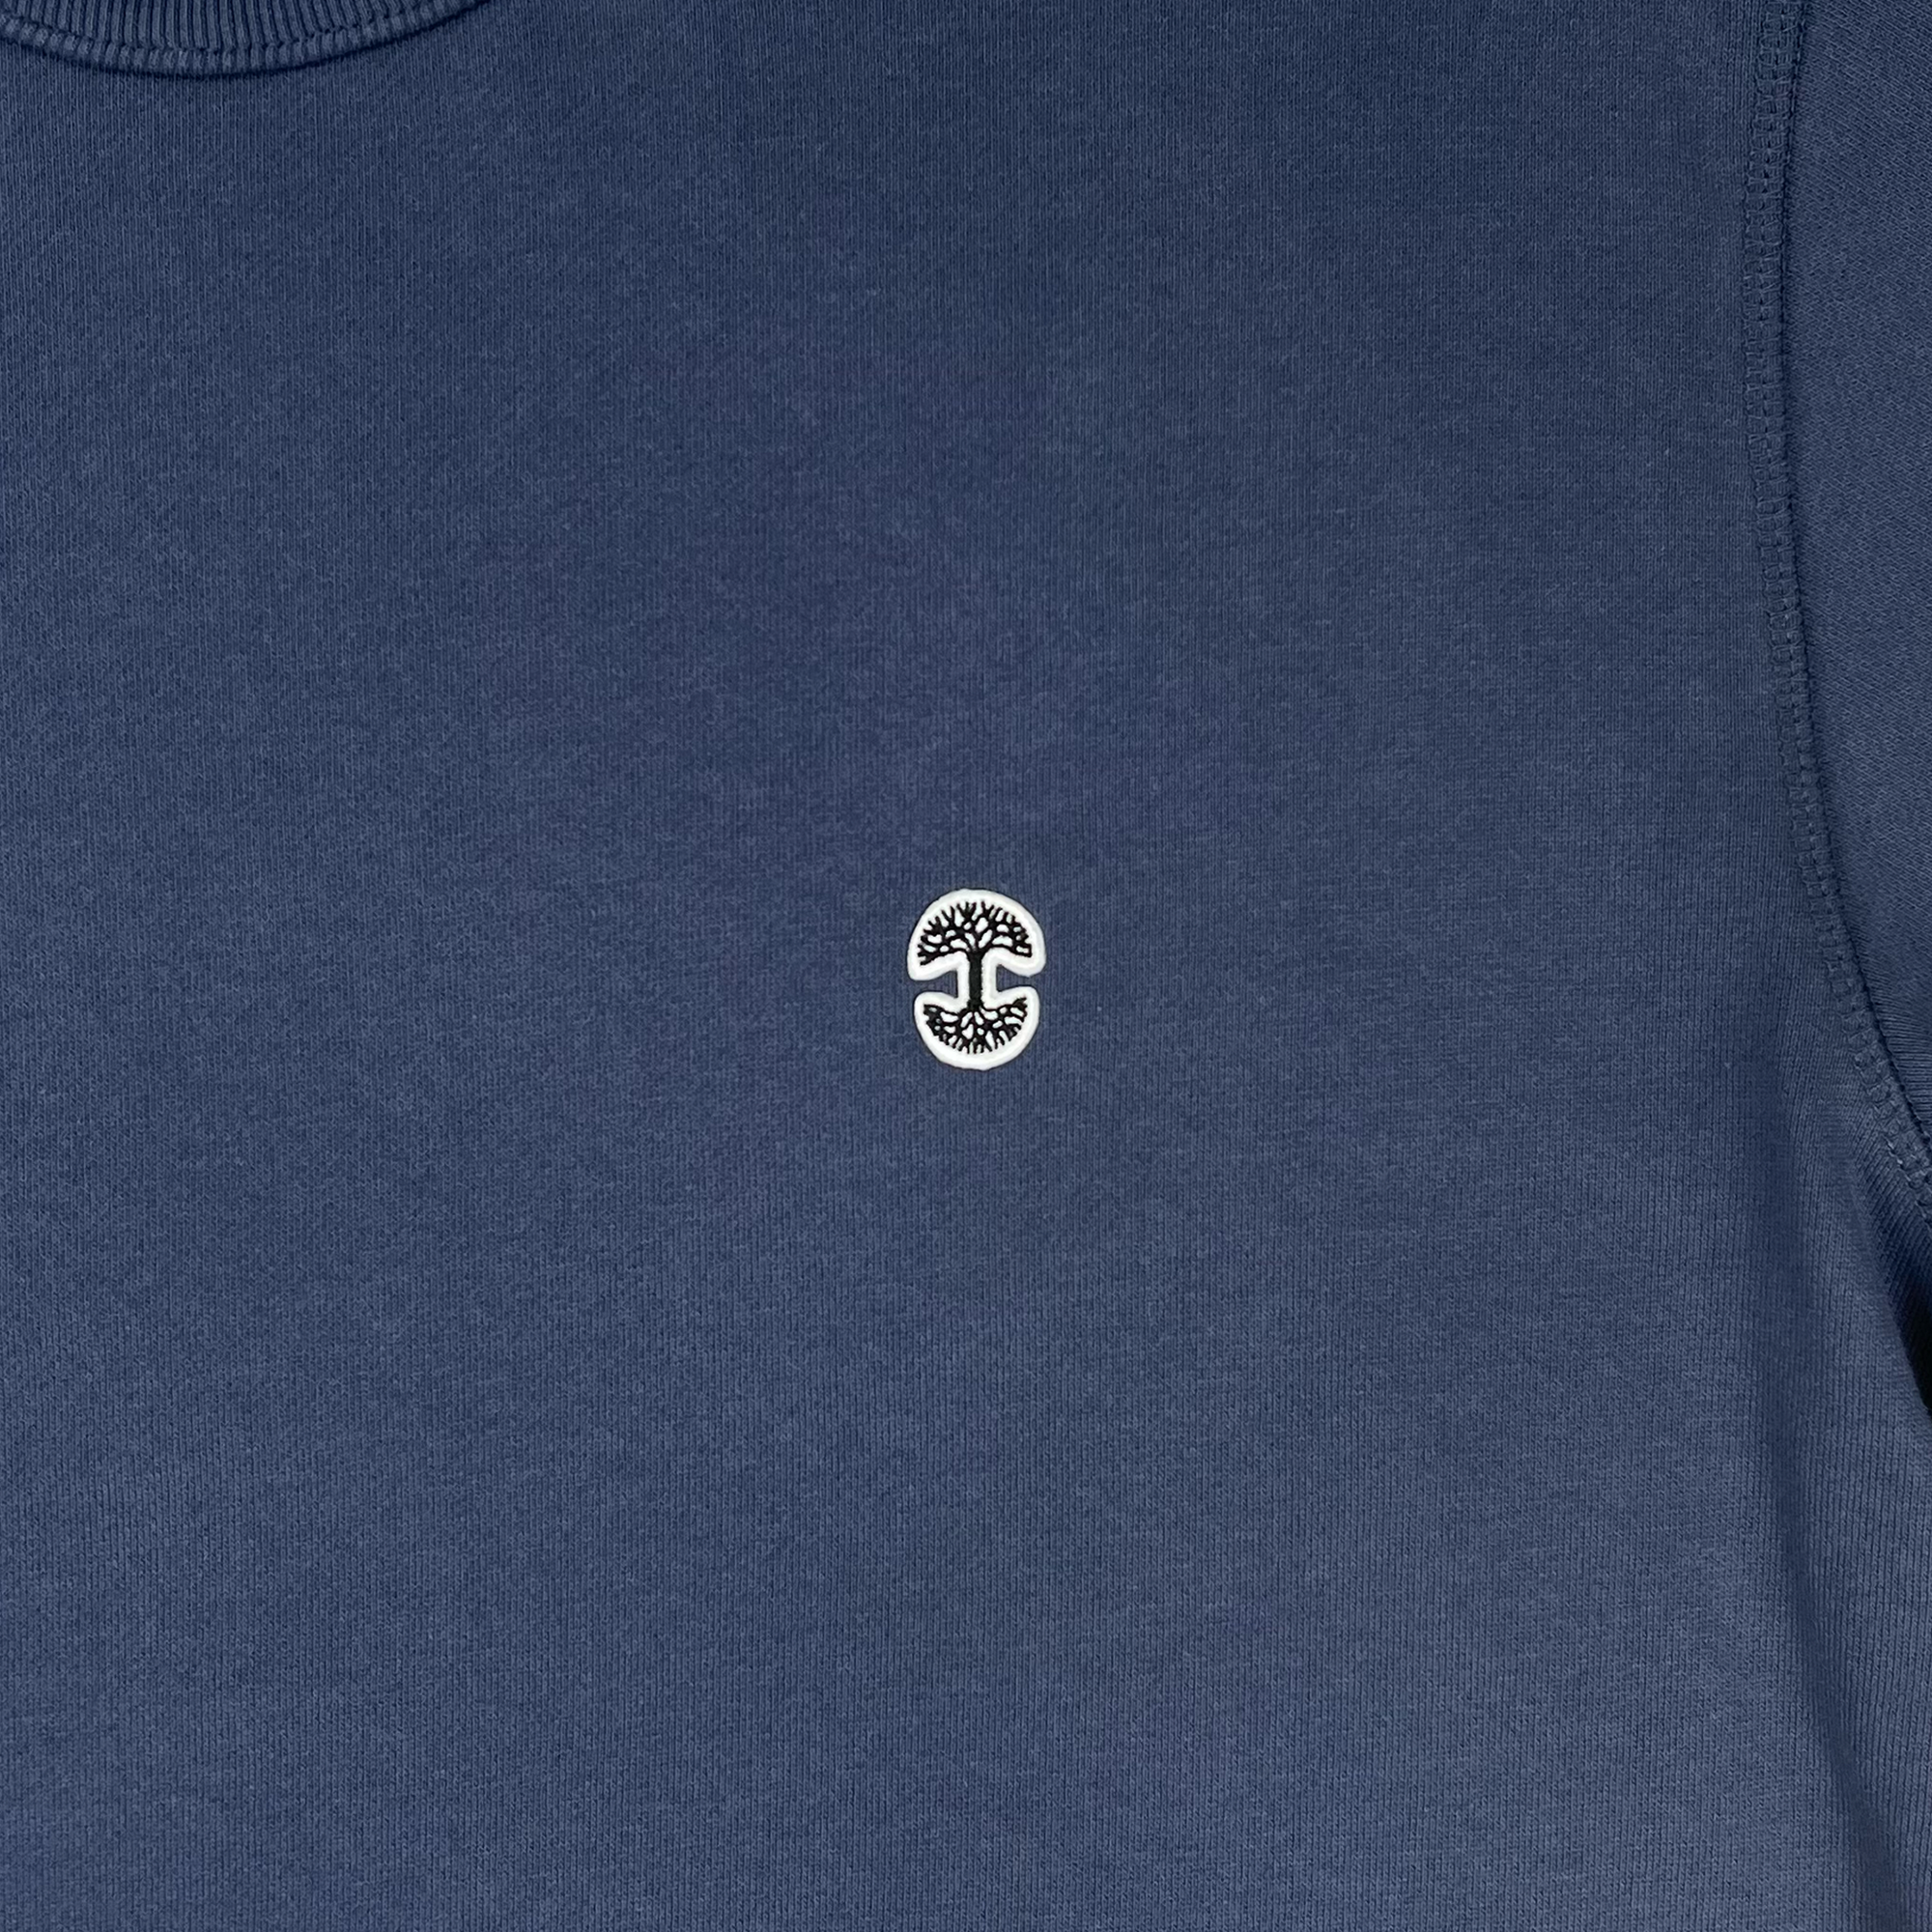 Detailed front view of Premium crewneck sweatshirt - Oaklandish tree logo, Petrol Blue.